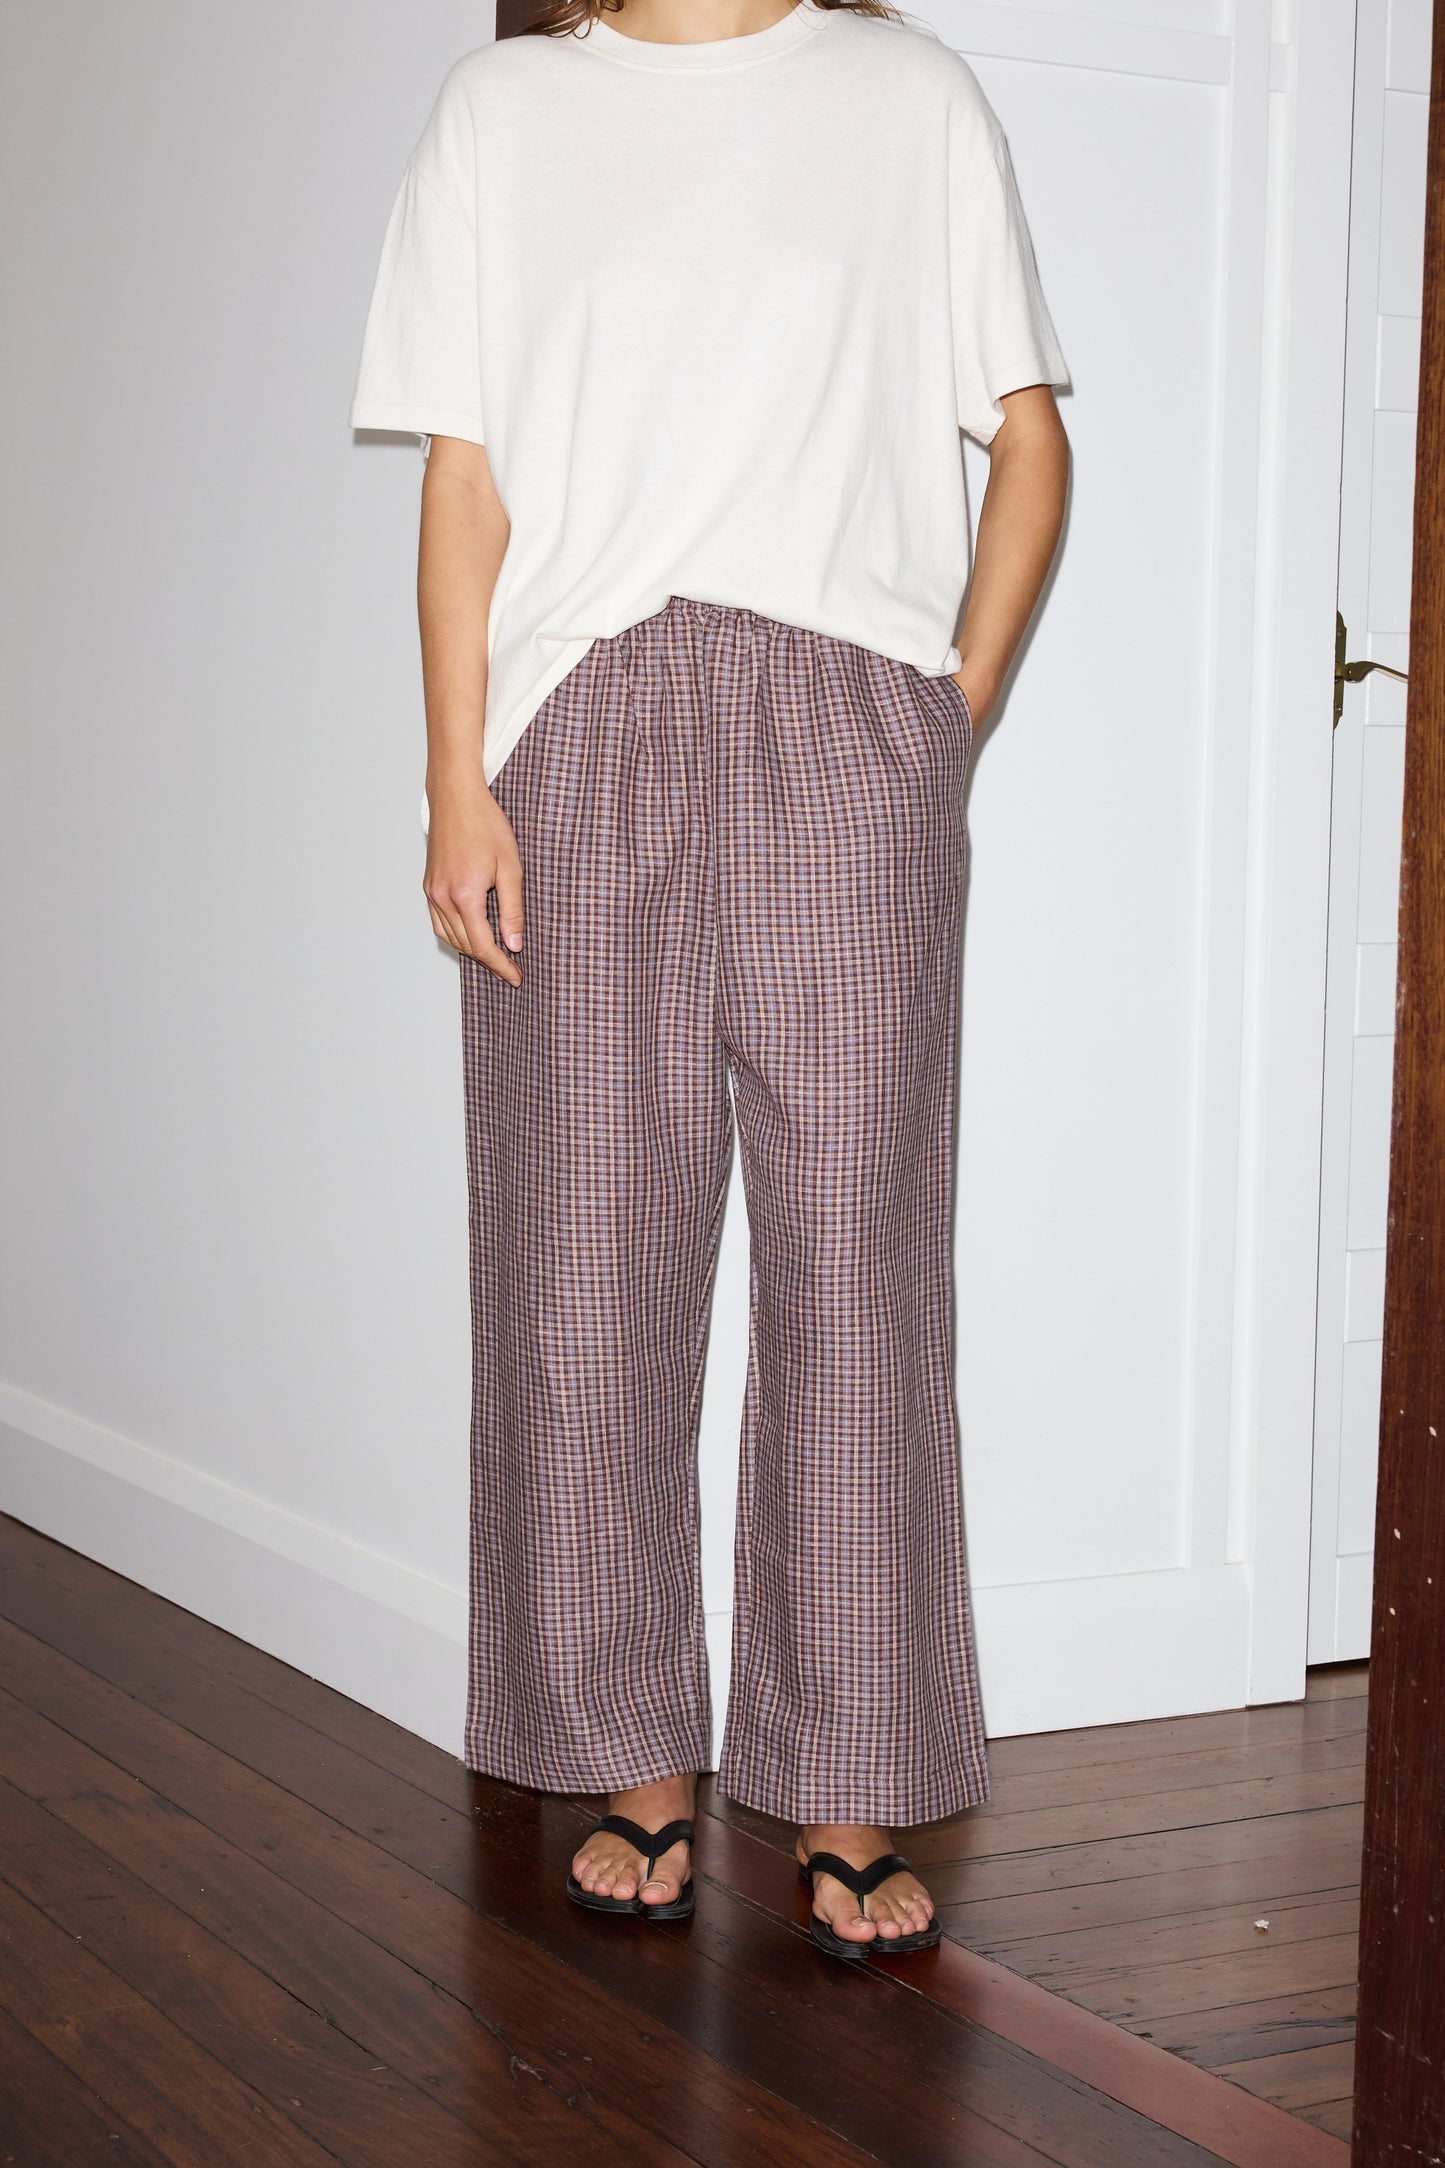 Female model wearing the ease trouser - russet check by Deiji Studios against plain background